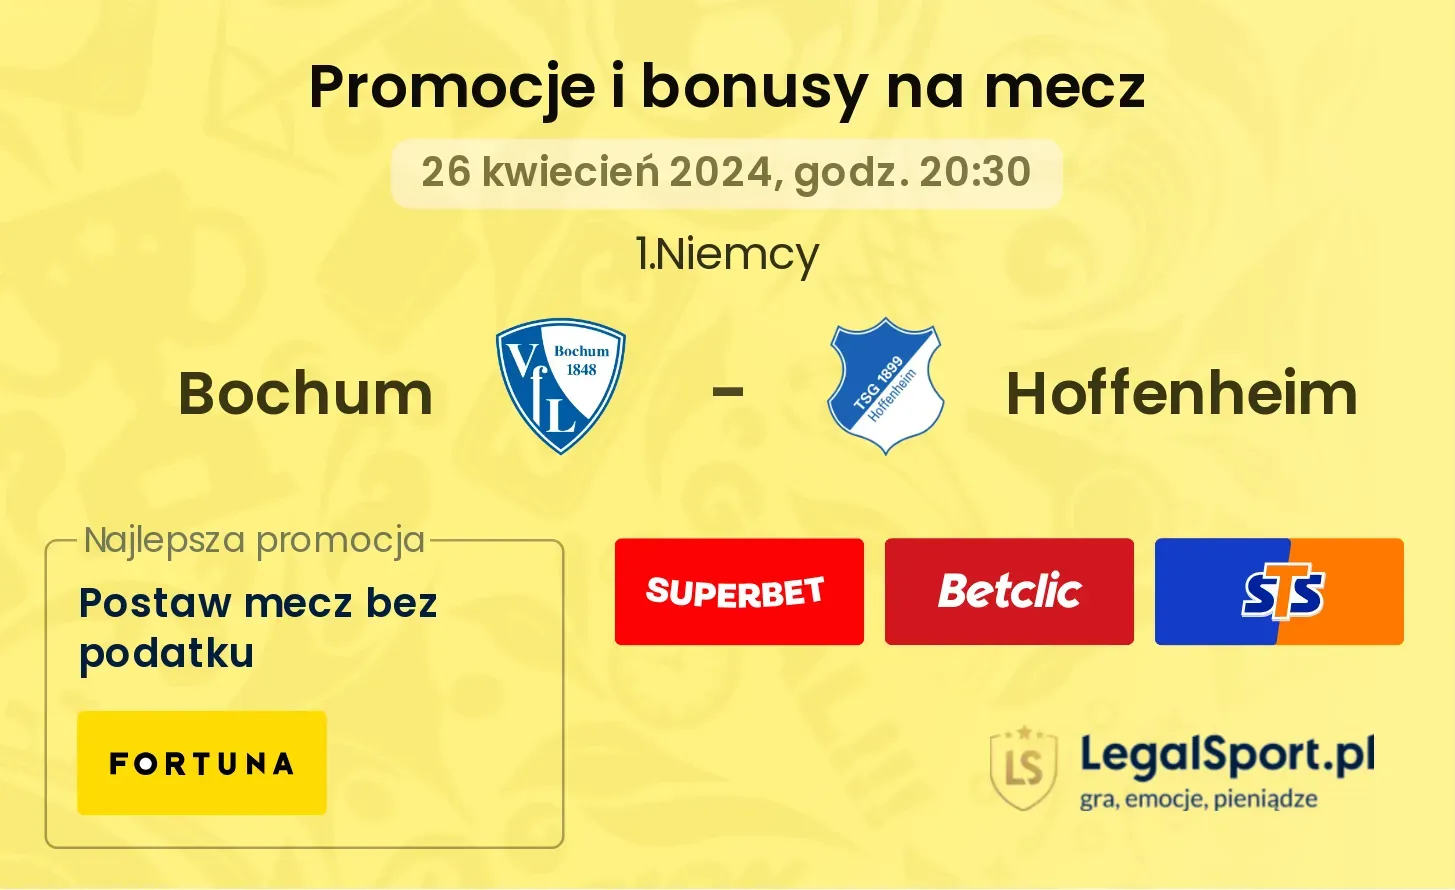 Bochum - Hoffenheim promocje bonusy na mecz